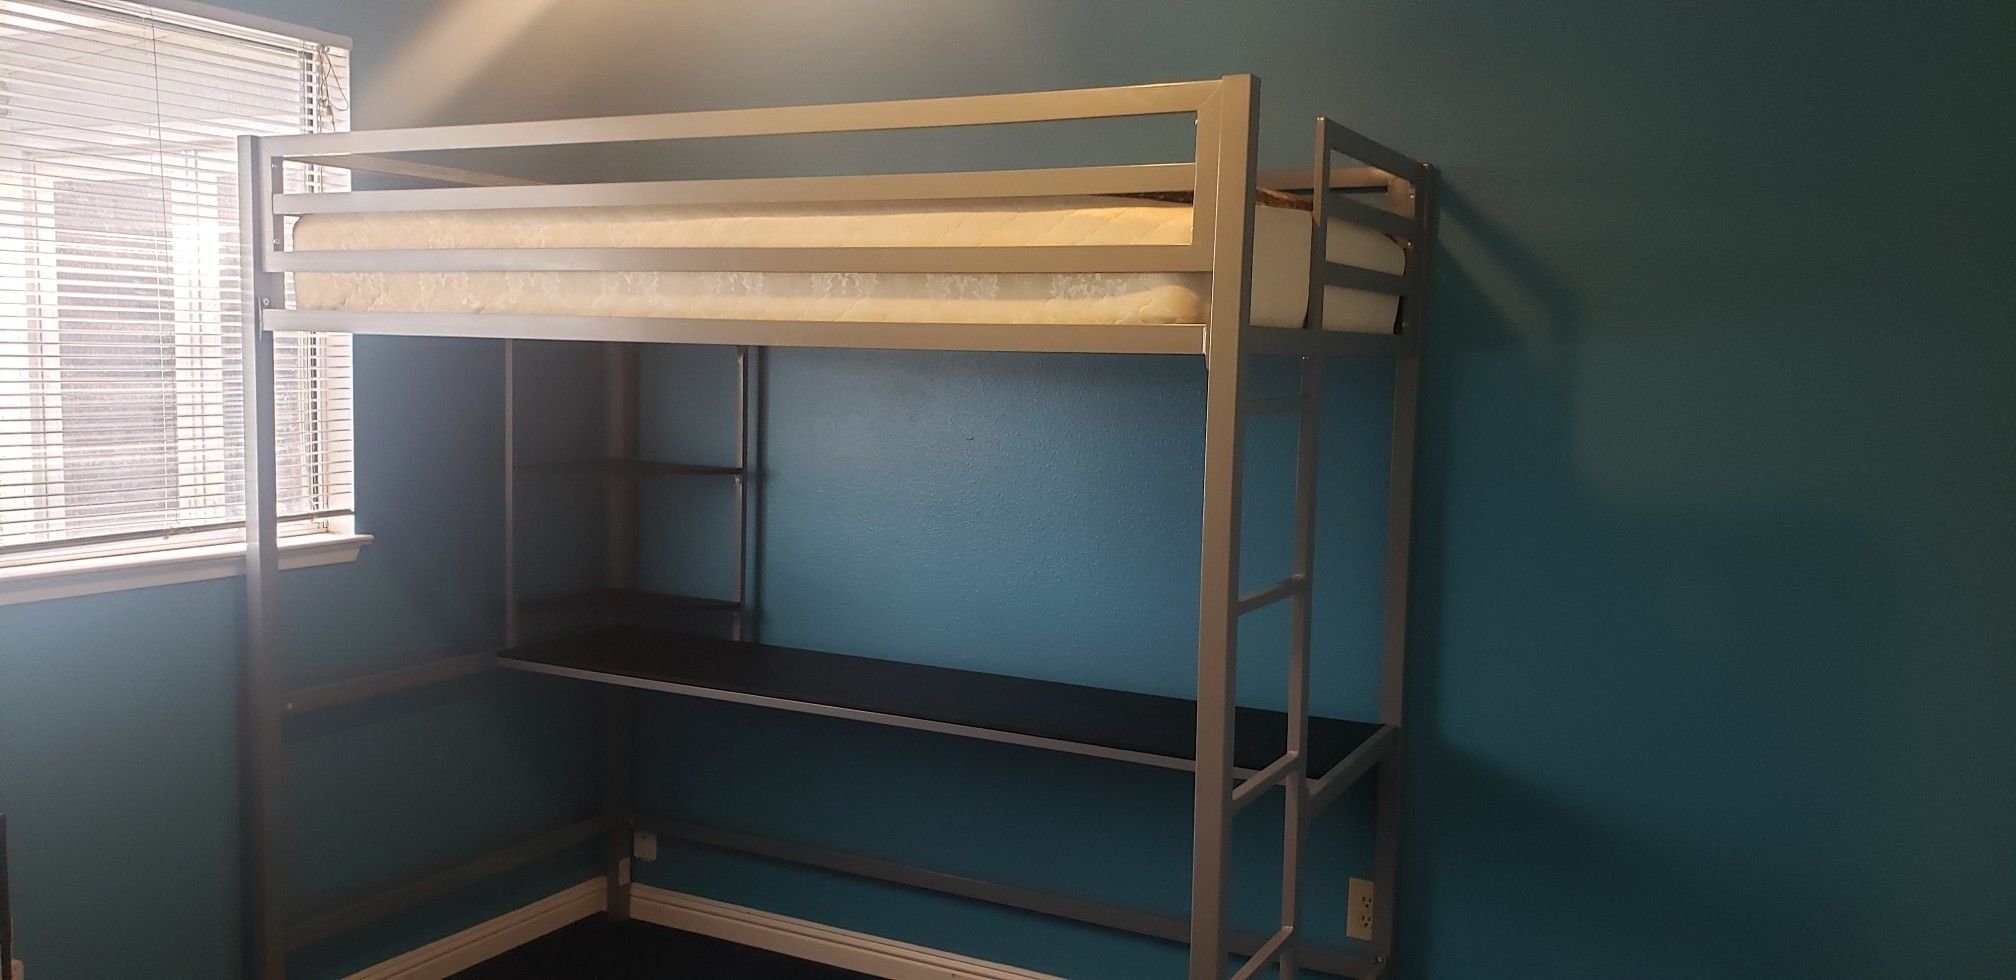 Loft bunk bed with desk